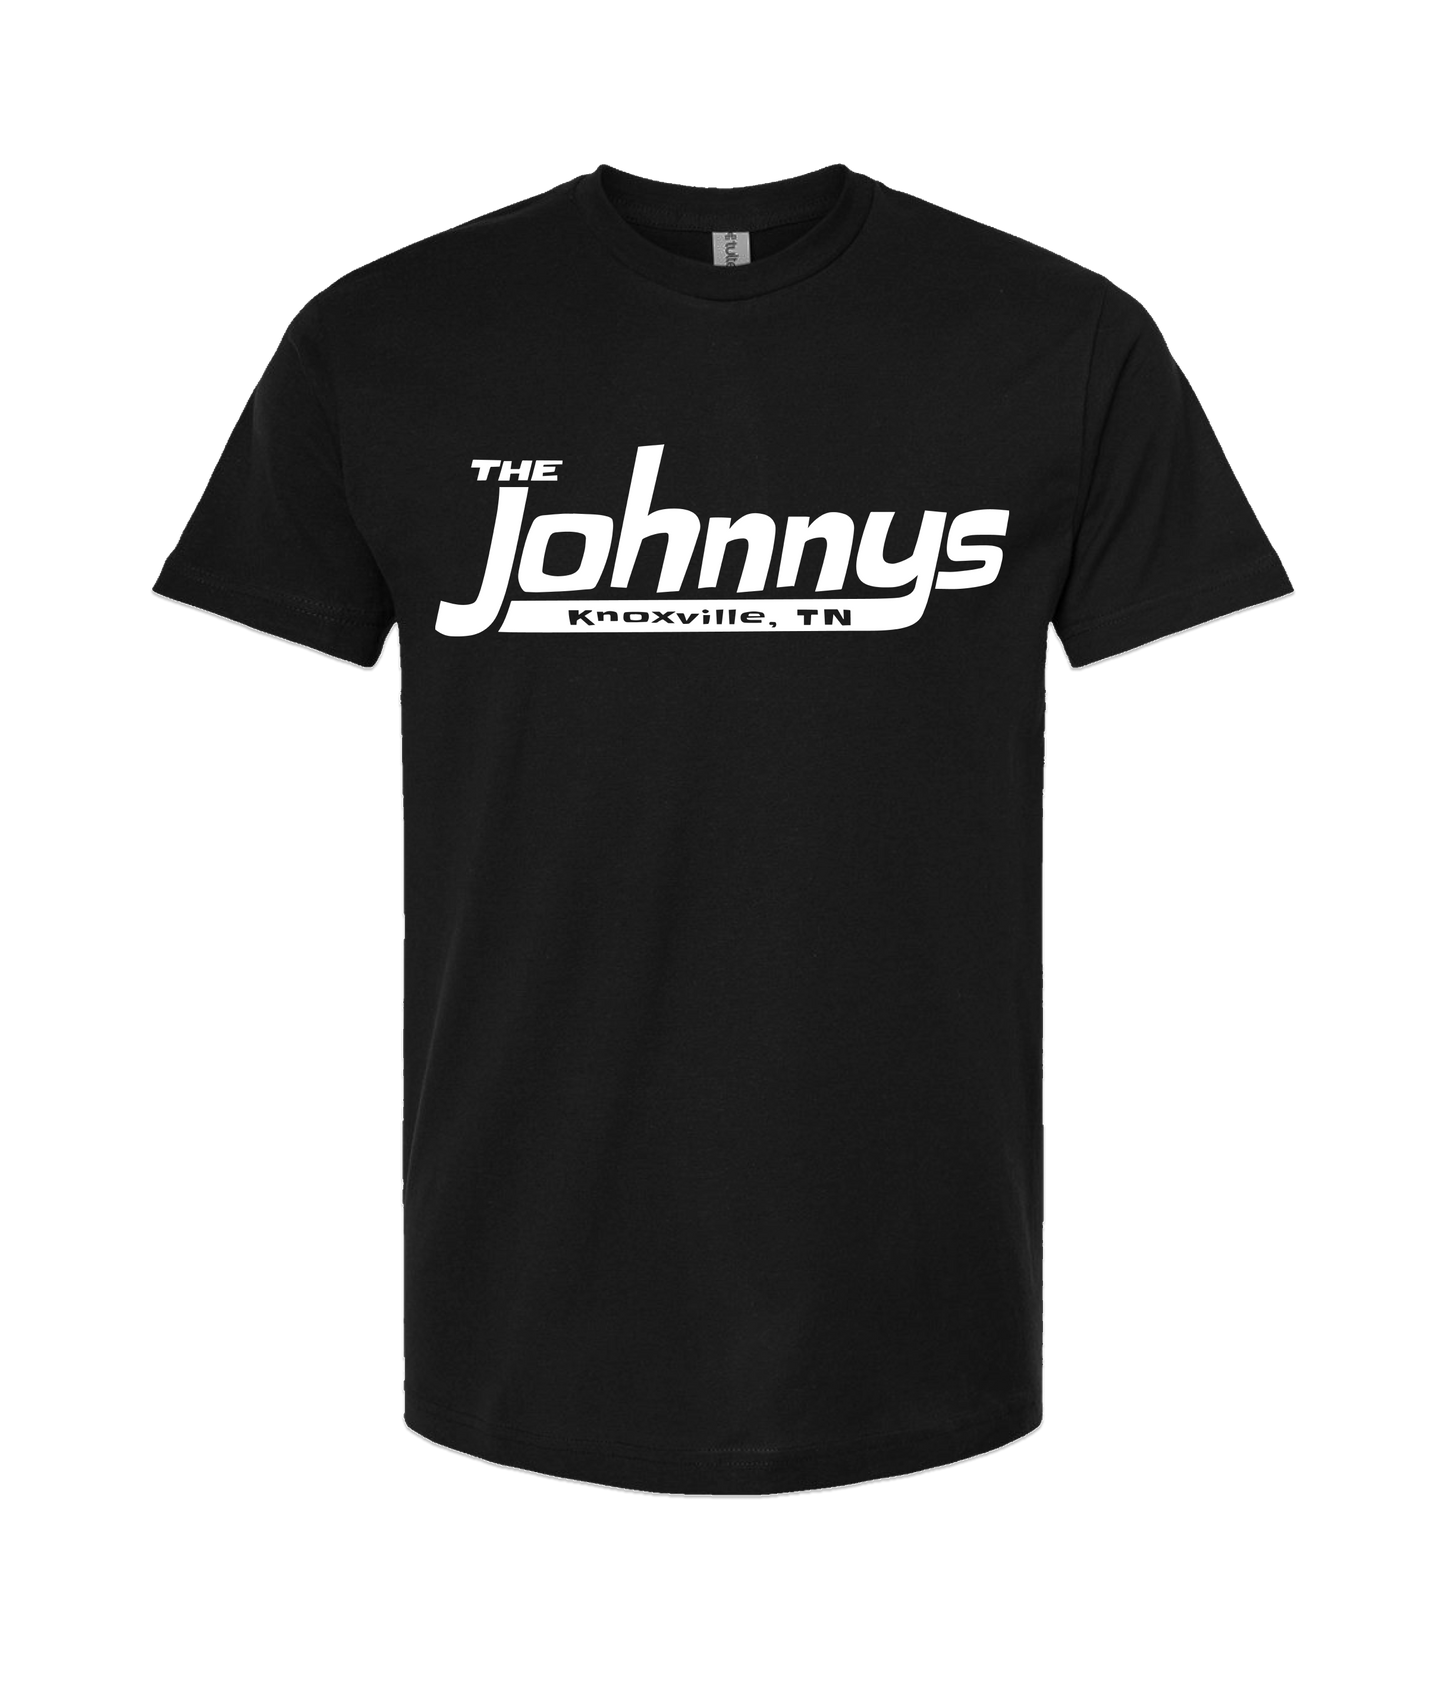 The Johnnys - LOGO 2 - Black T Shirt